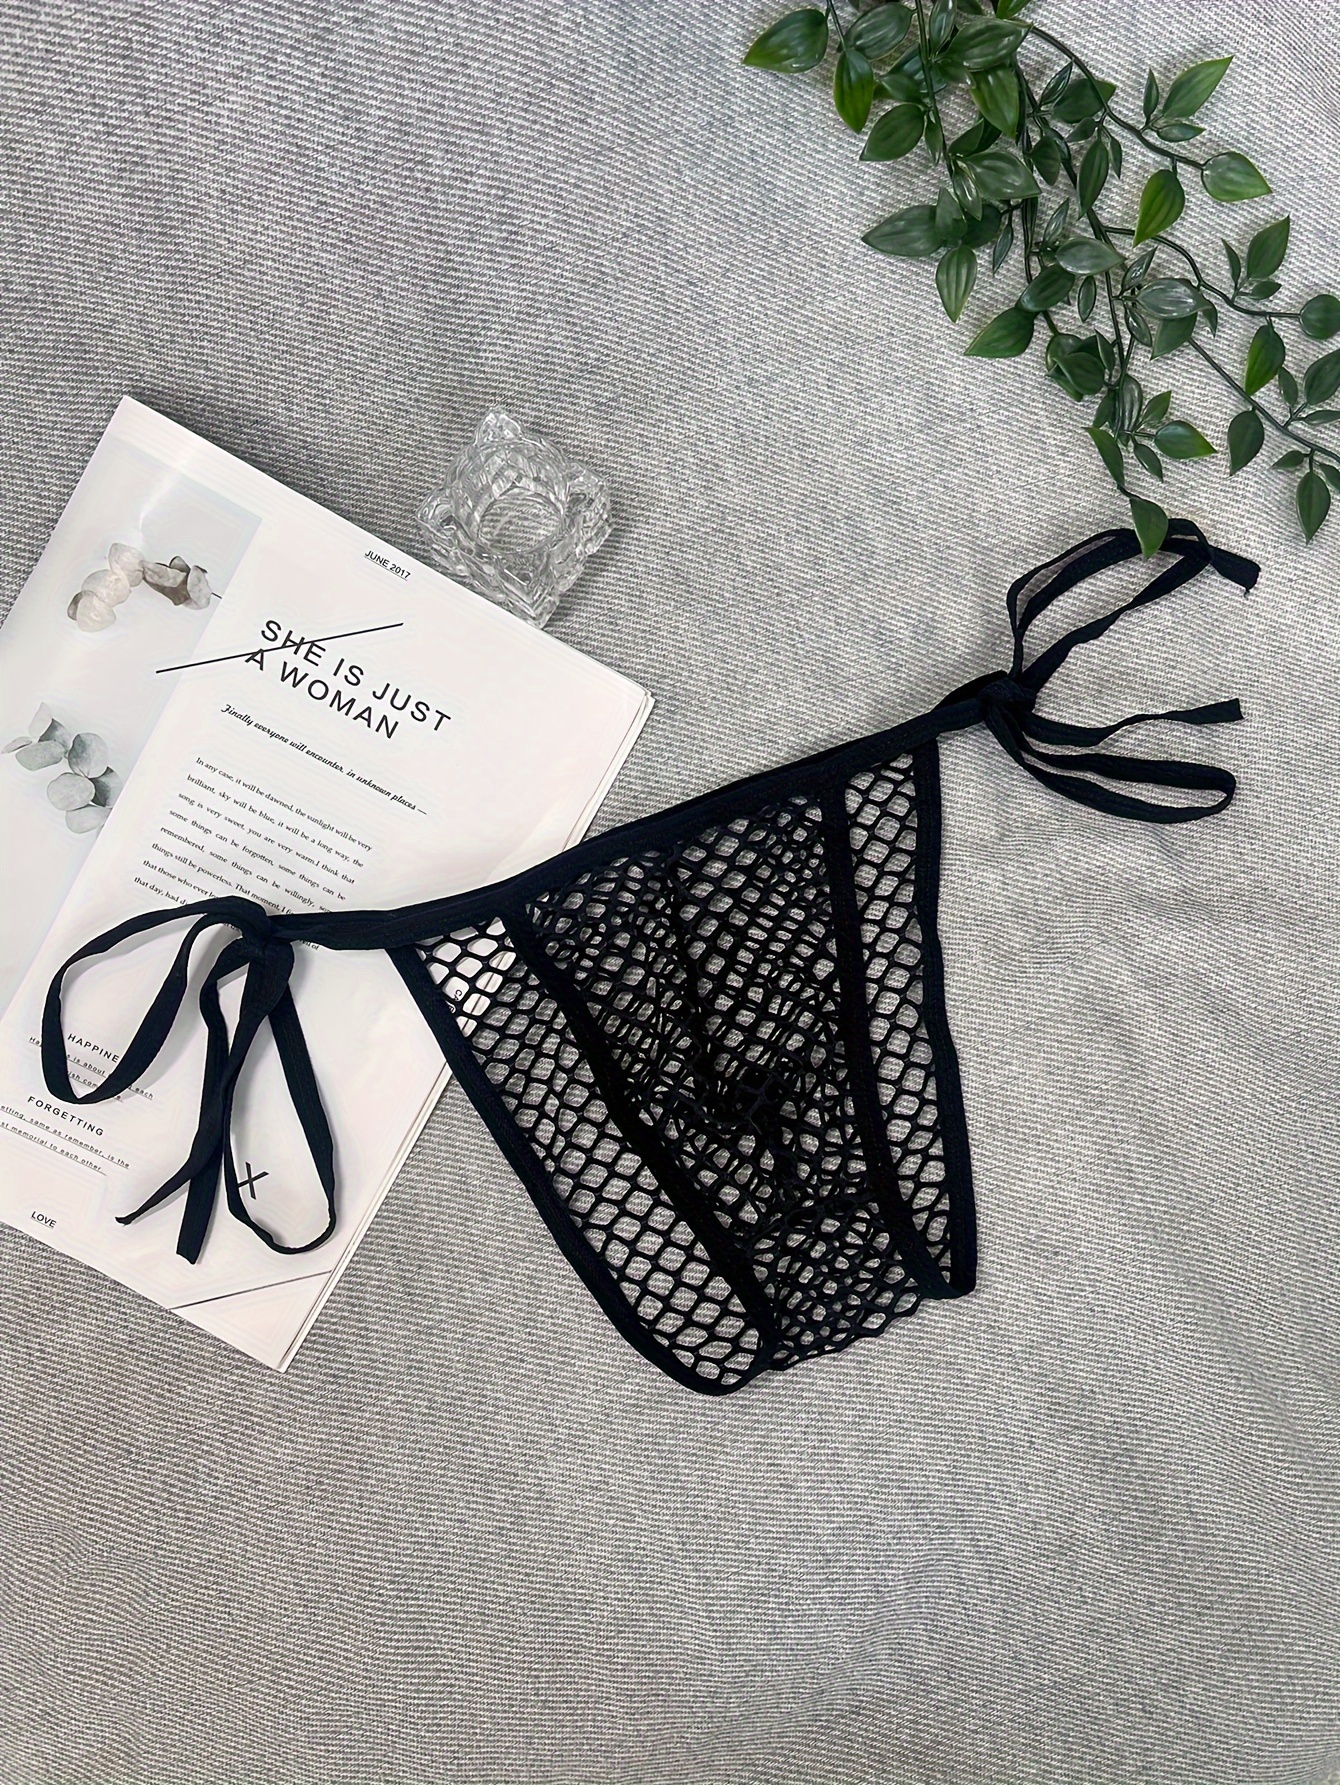 G-String for Mens PVC Underwear (Large, Transparent Black)